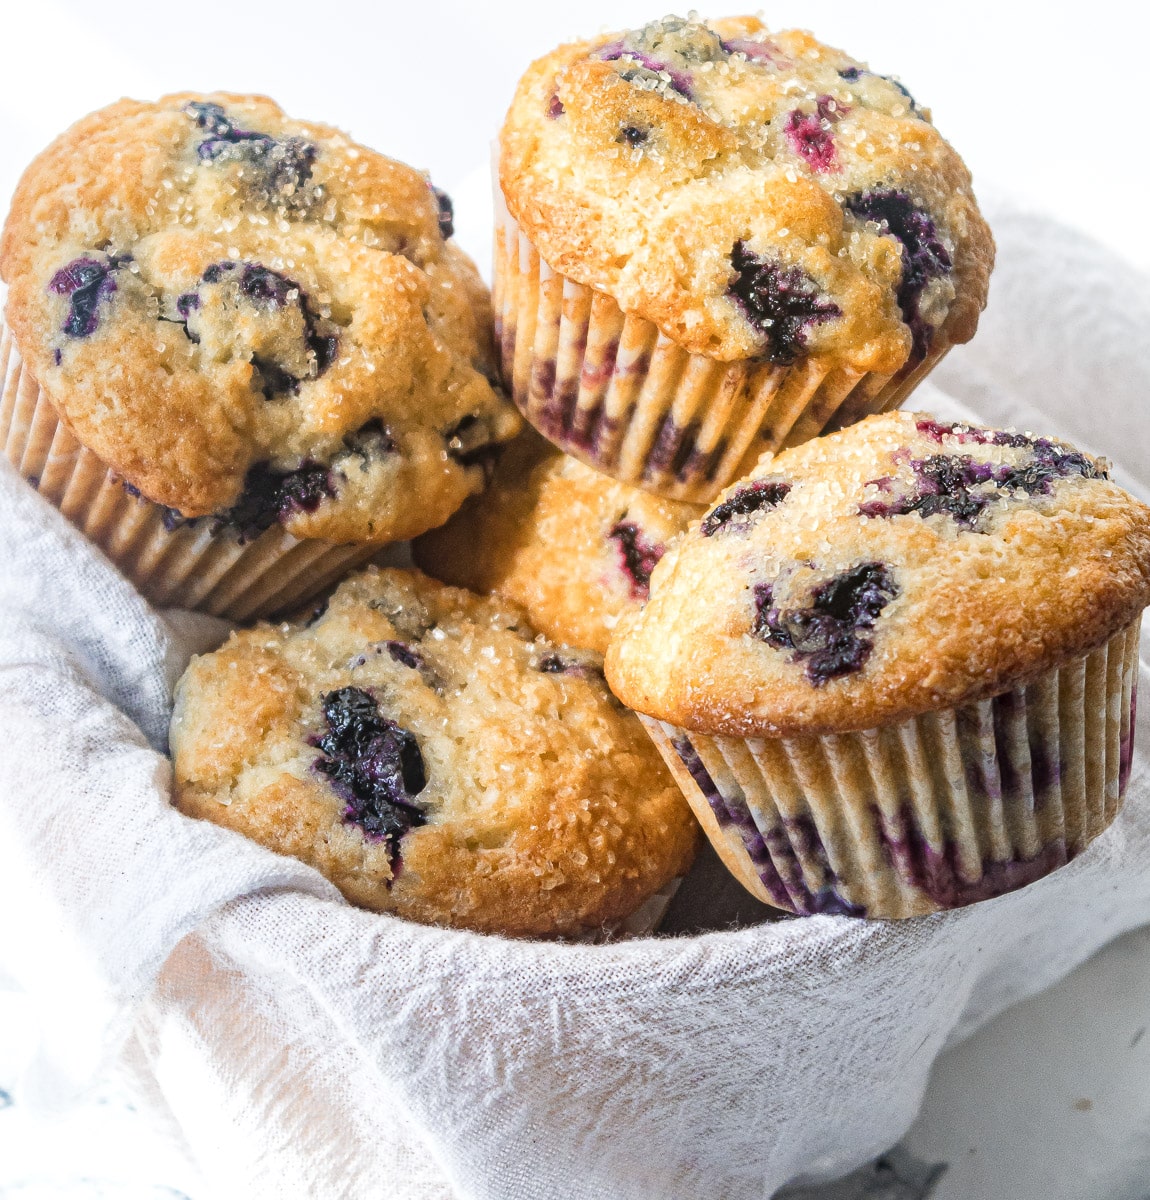 Buttermilk Blueberry muffins in a basket